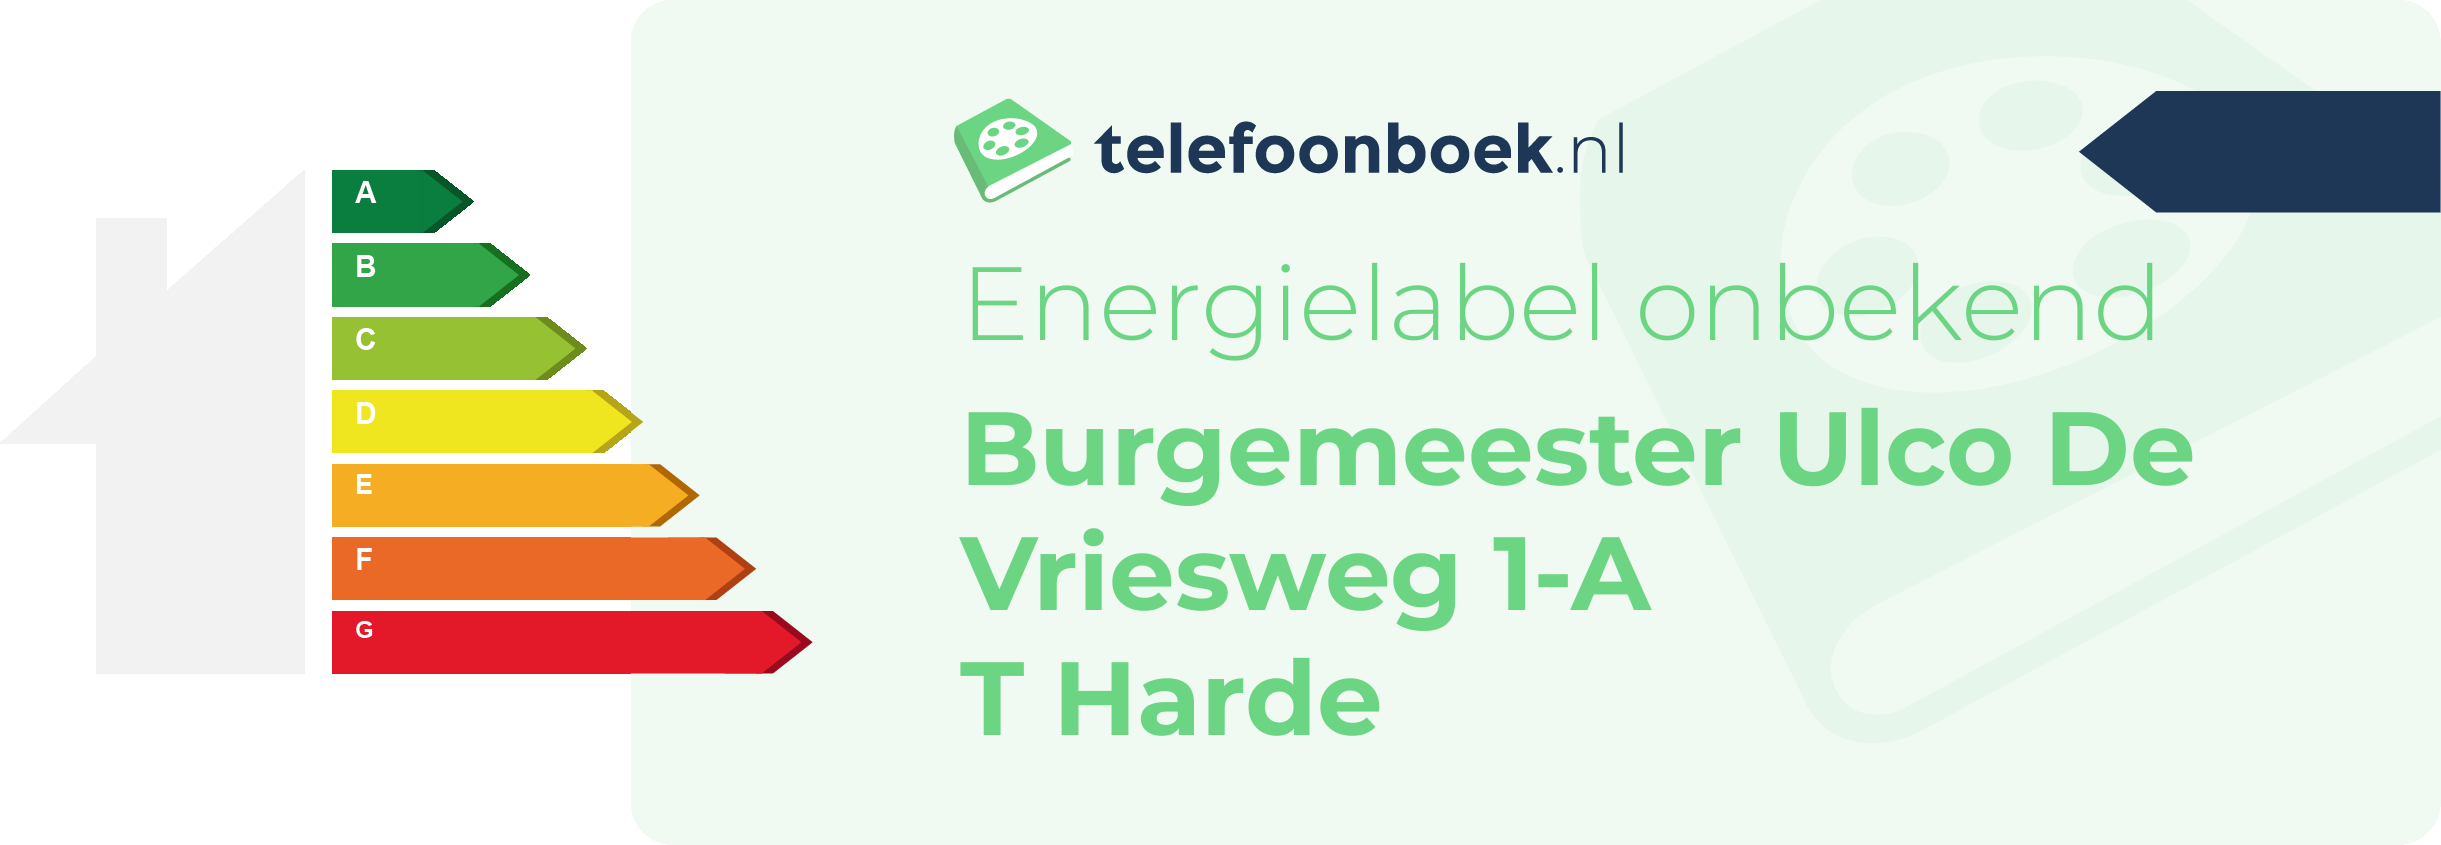 Energielabel Burgemeester Ulco De Vriesweg 1-A T Harde